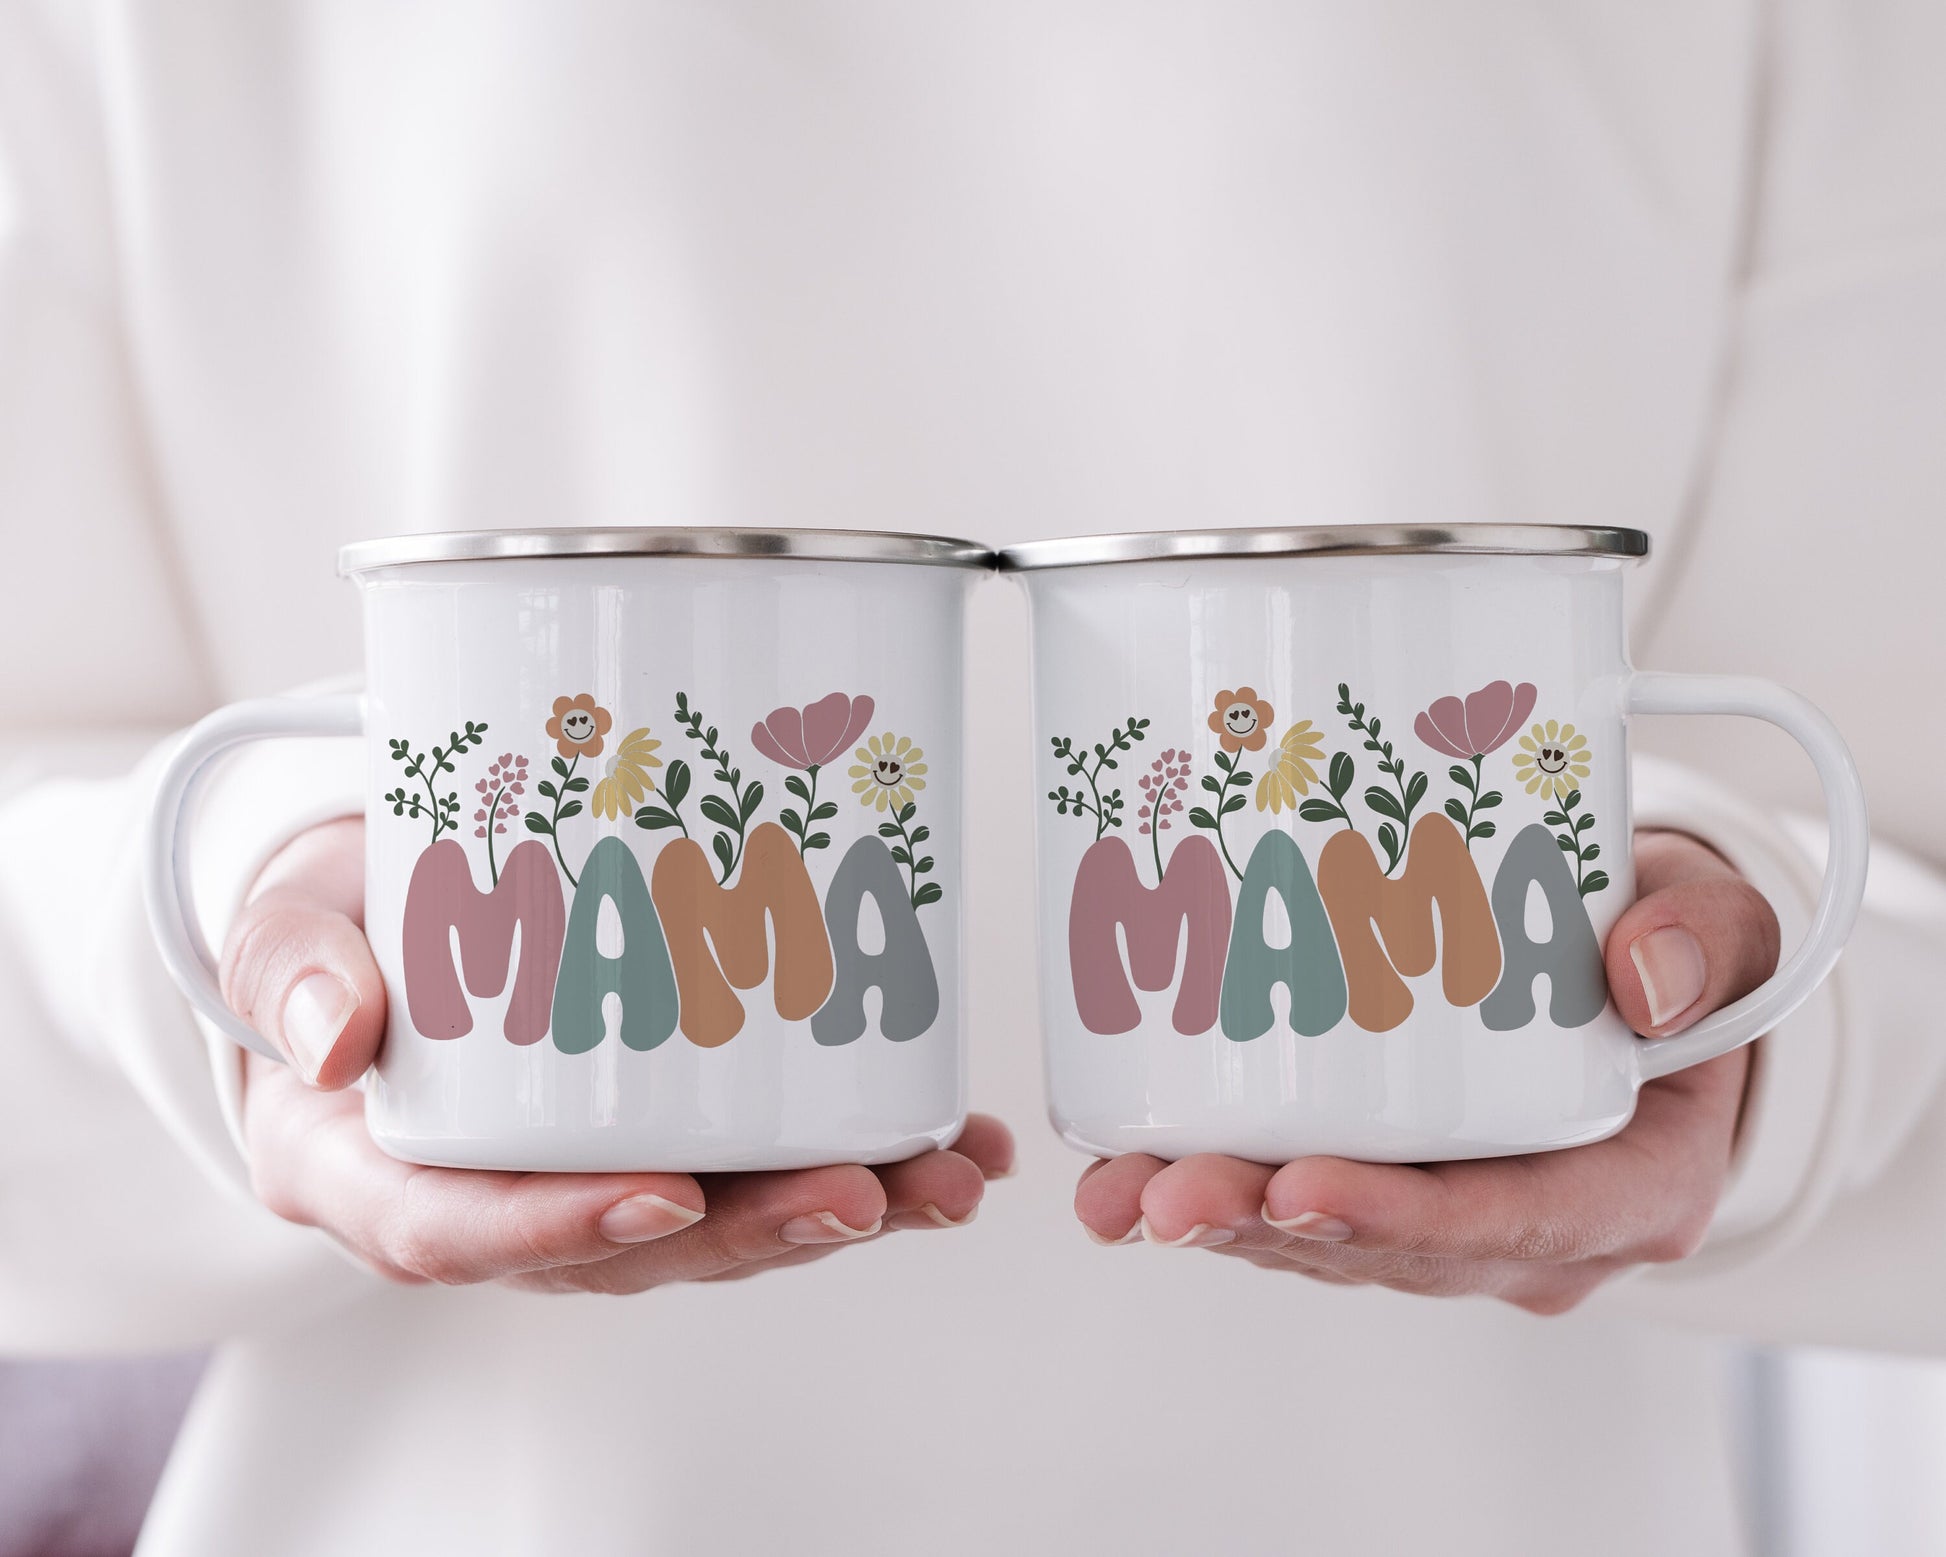 Cool Mom, Mom Coffee Mug, Mom Mug, Unique Gift For Mom, Mothers Day Gift,  Mom Gift, Gift For Cool Moms, Two Toned Ceramic Mug, Mother's Day Gifts For